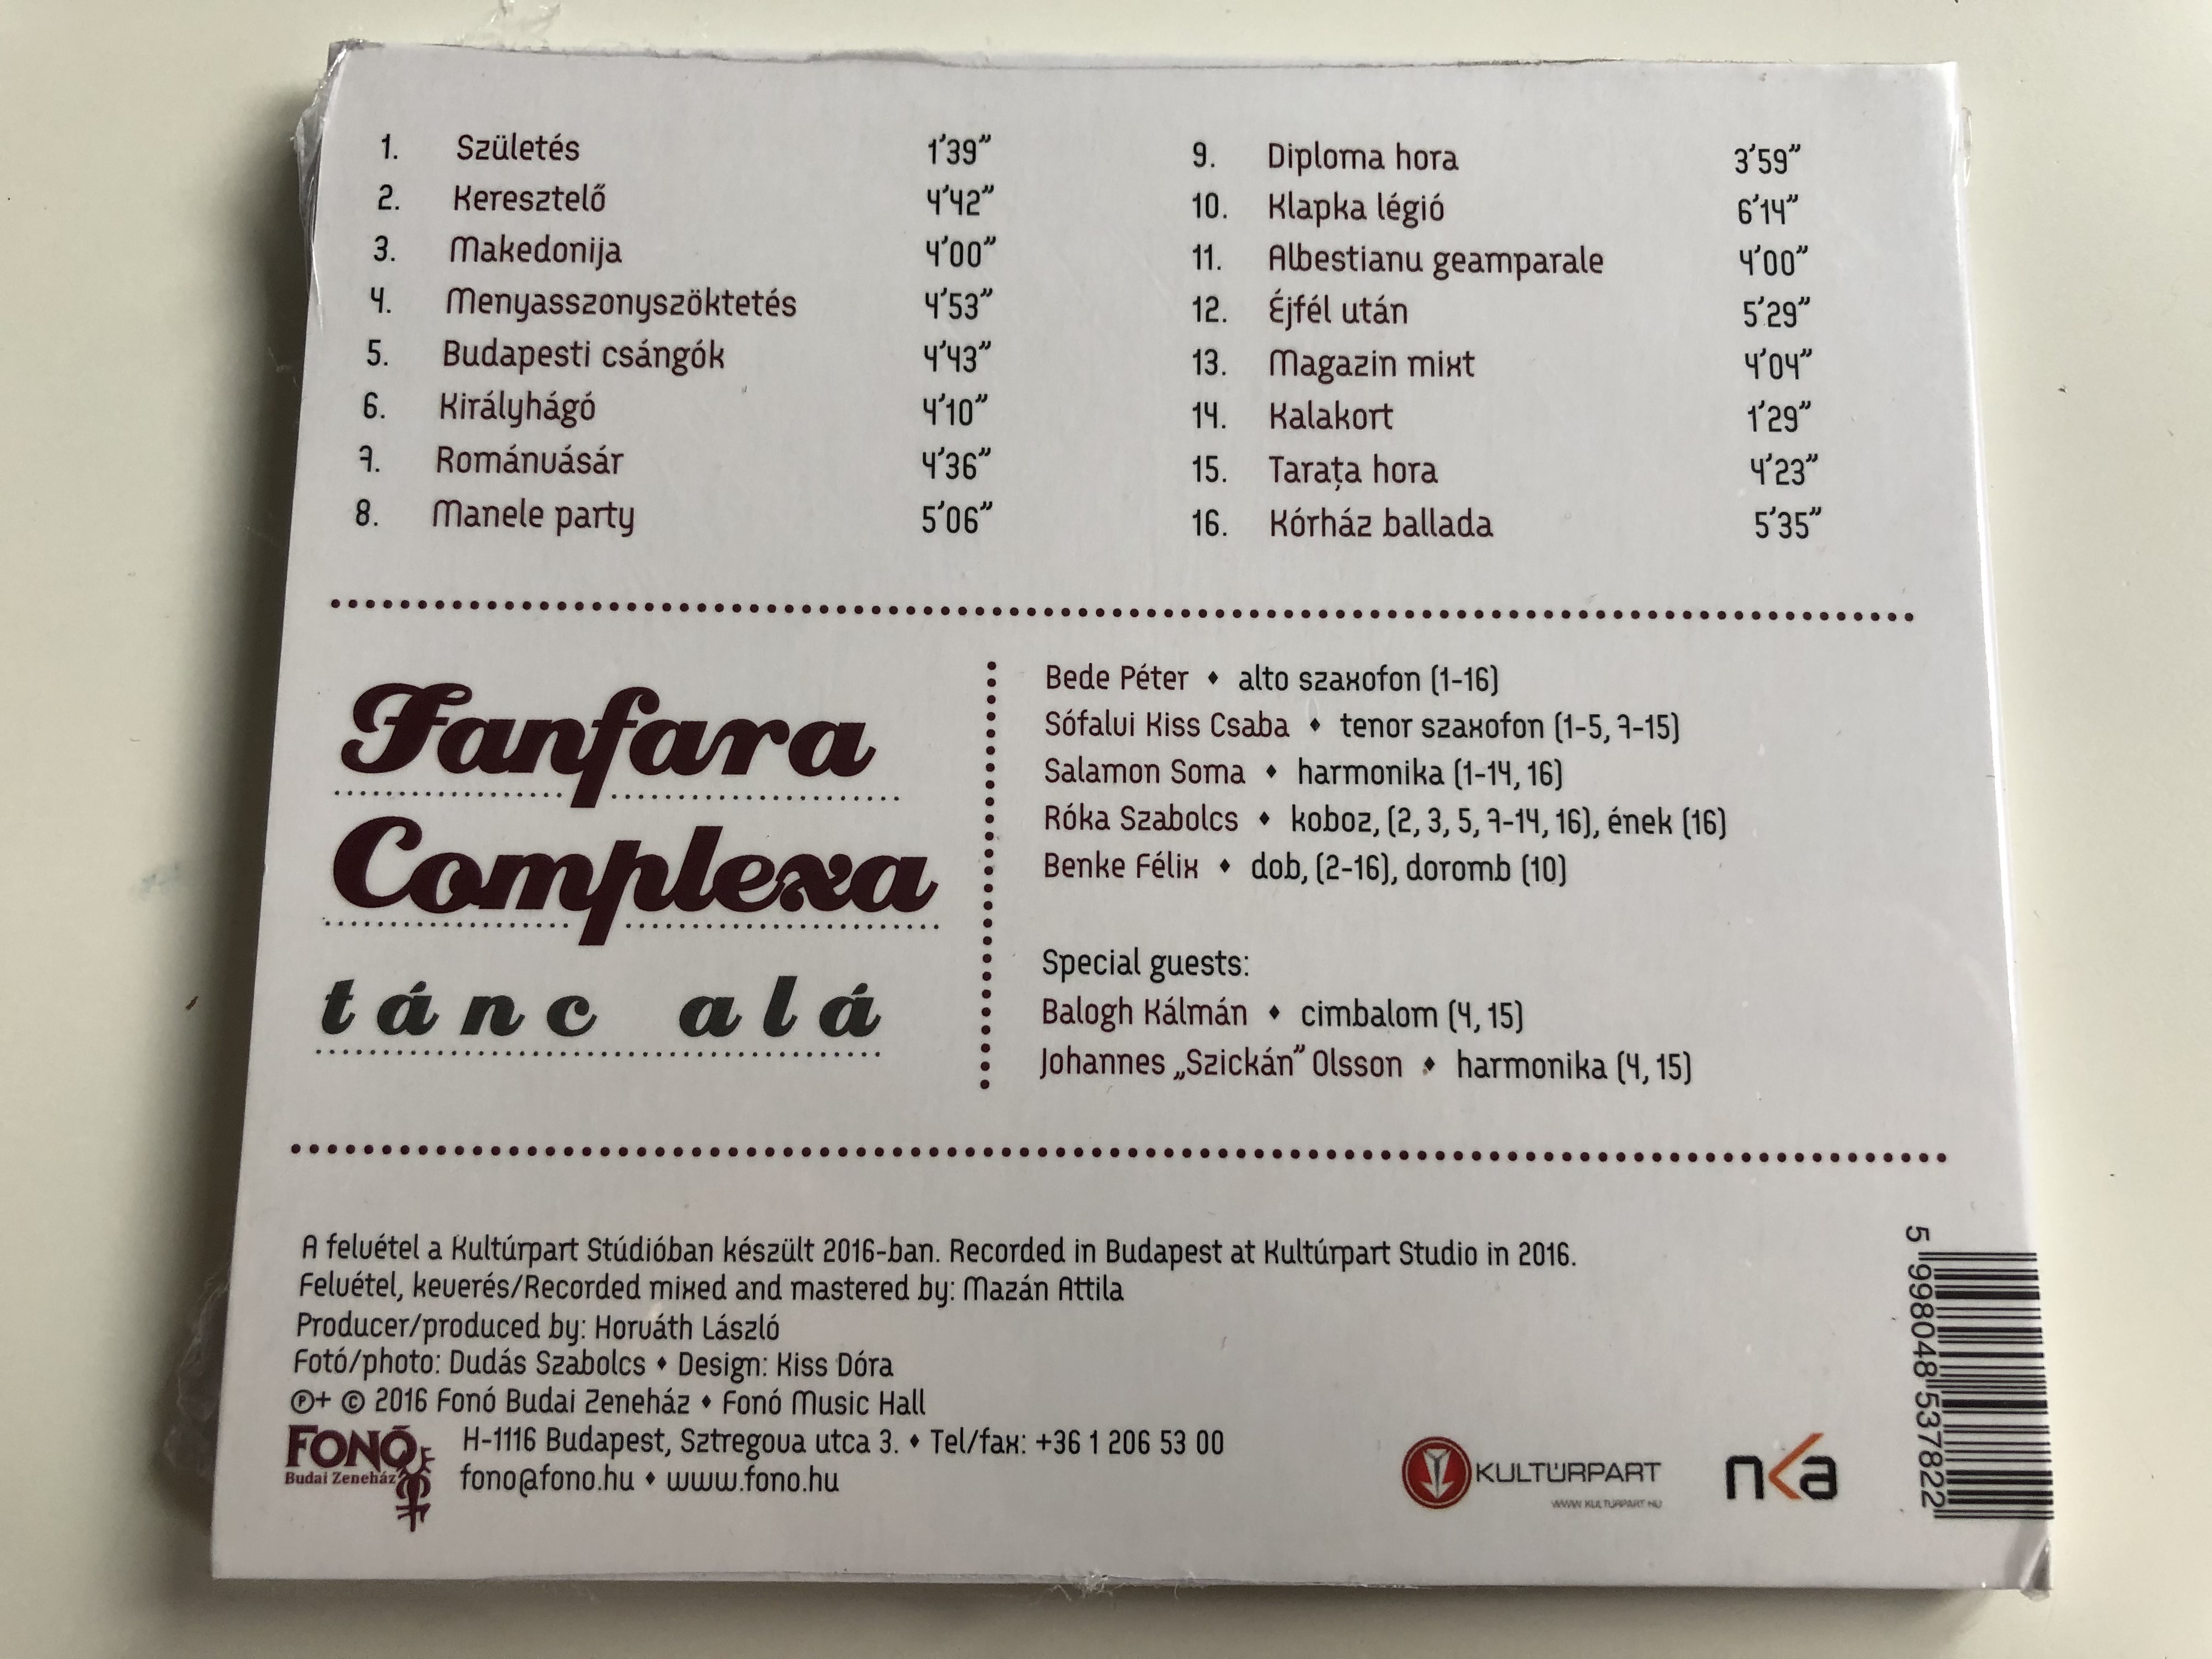 fanfara-complexa-t-nc-al-fon-budai-zeneh-z-audio-cd-2016-fa-378-2-2-.jpg